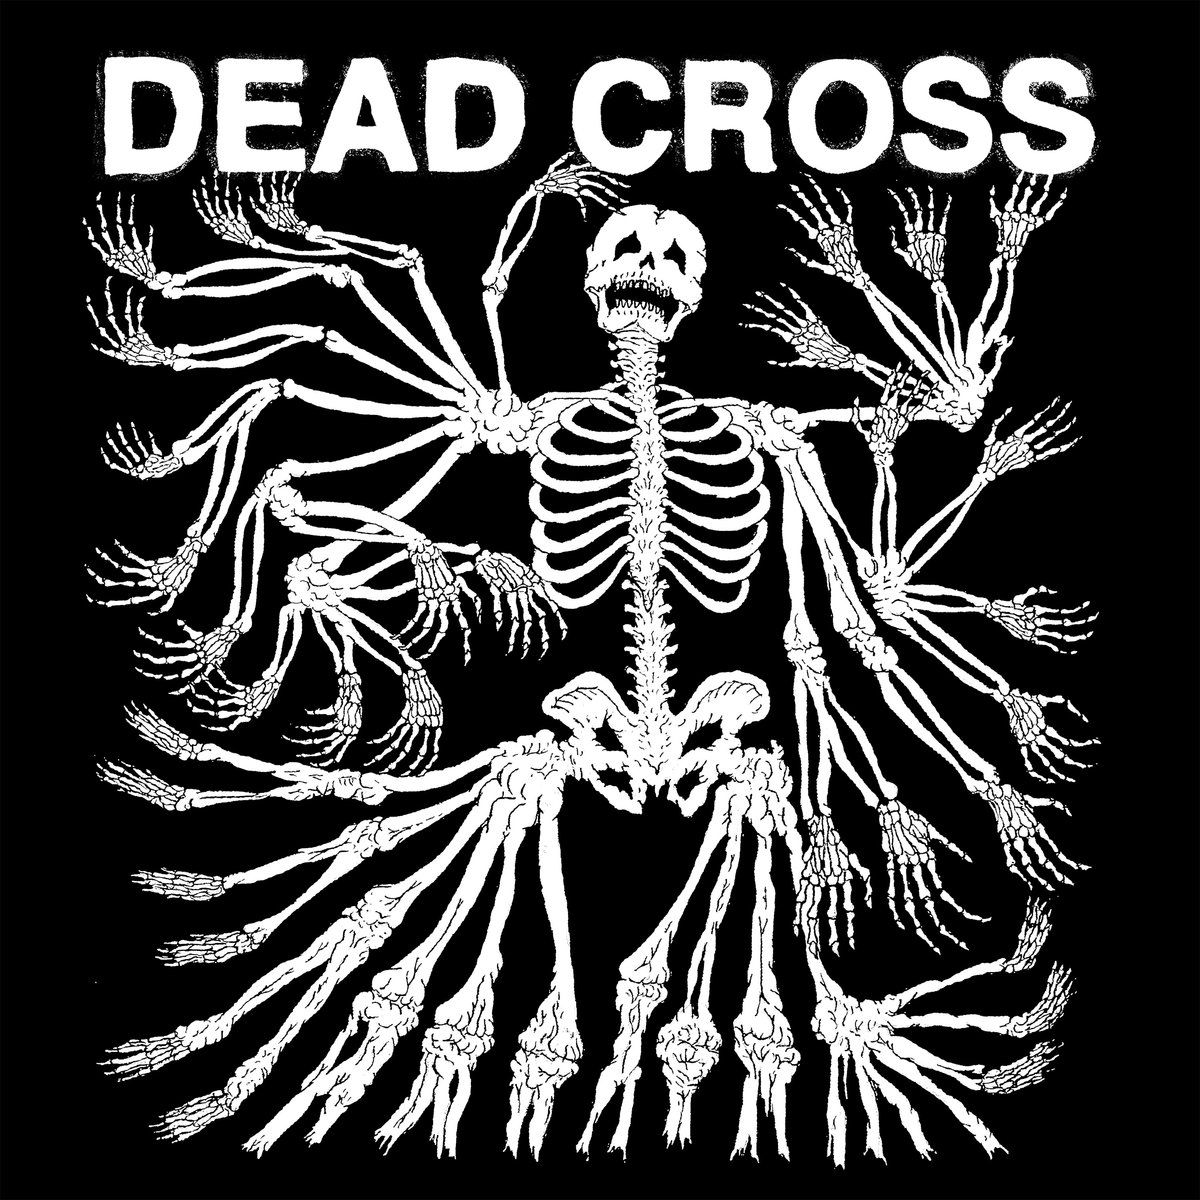 dead cross album stream Mike Patton and Dave Lombardo supergroup Dead Cross release self titled debut album: Stream